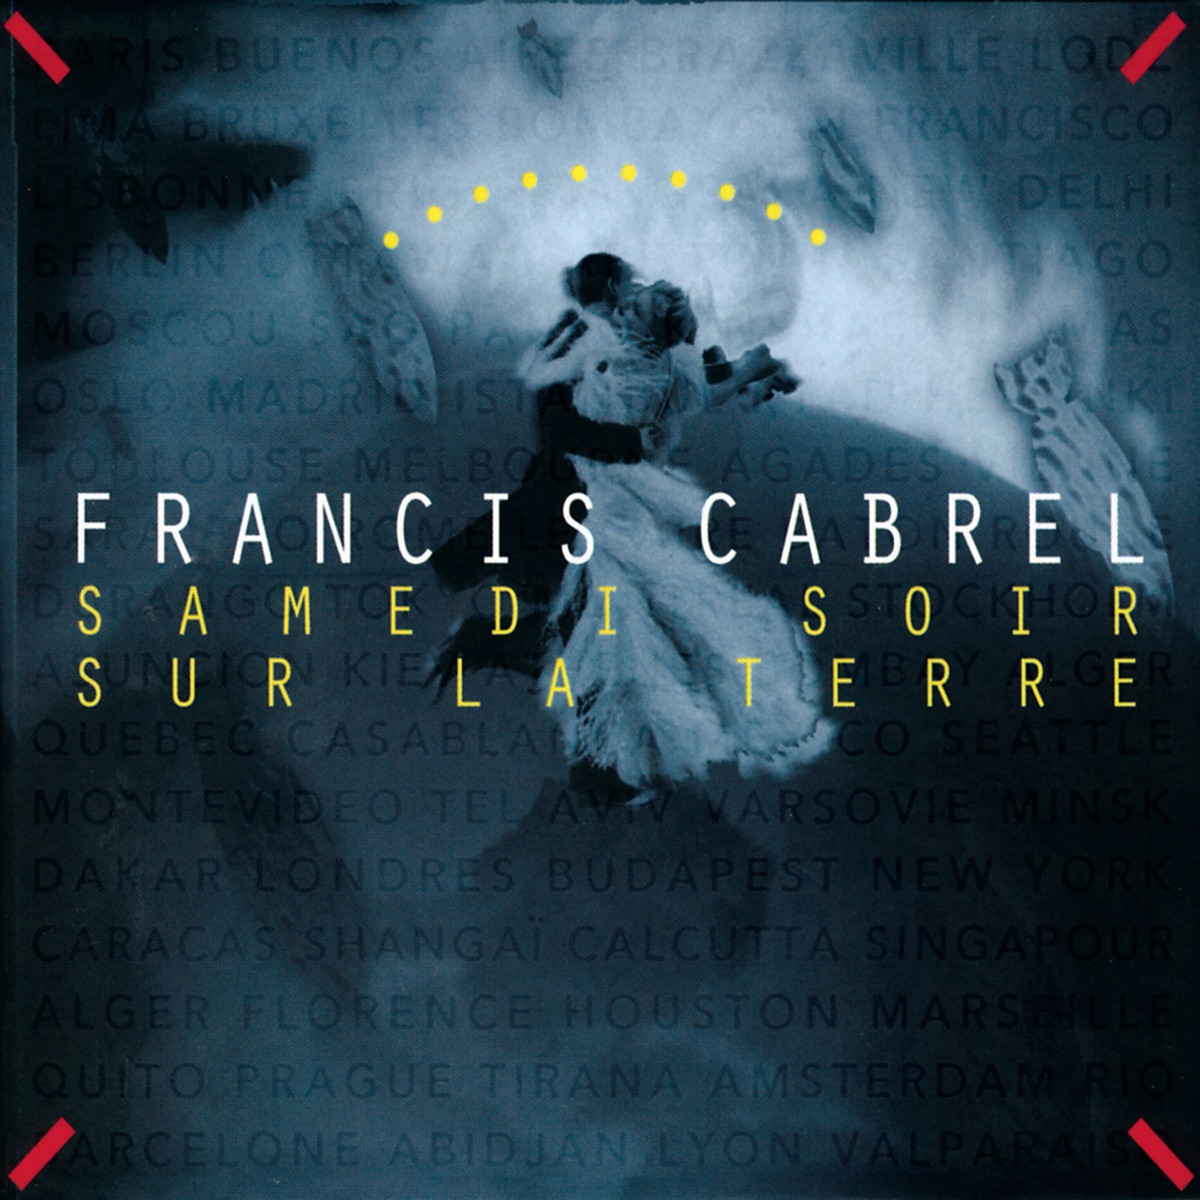 Samedi soir sur la terre (Remastered) by Francis Cabrel on Apple Music